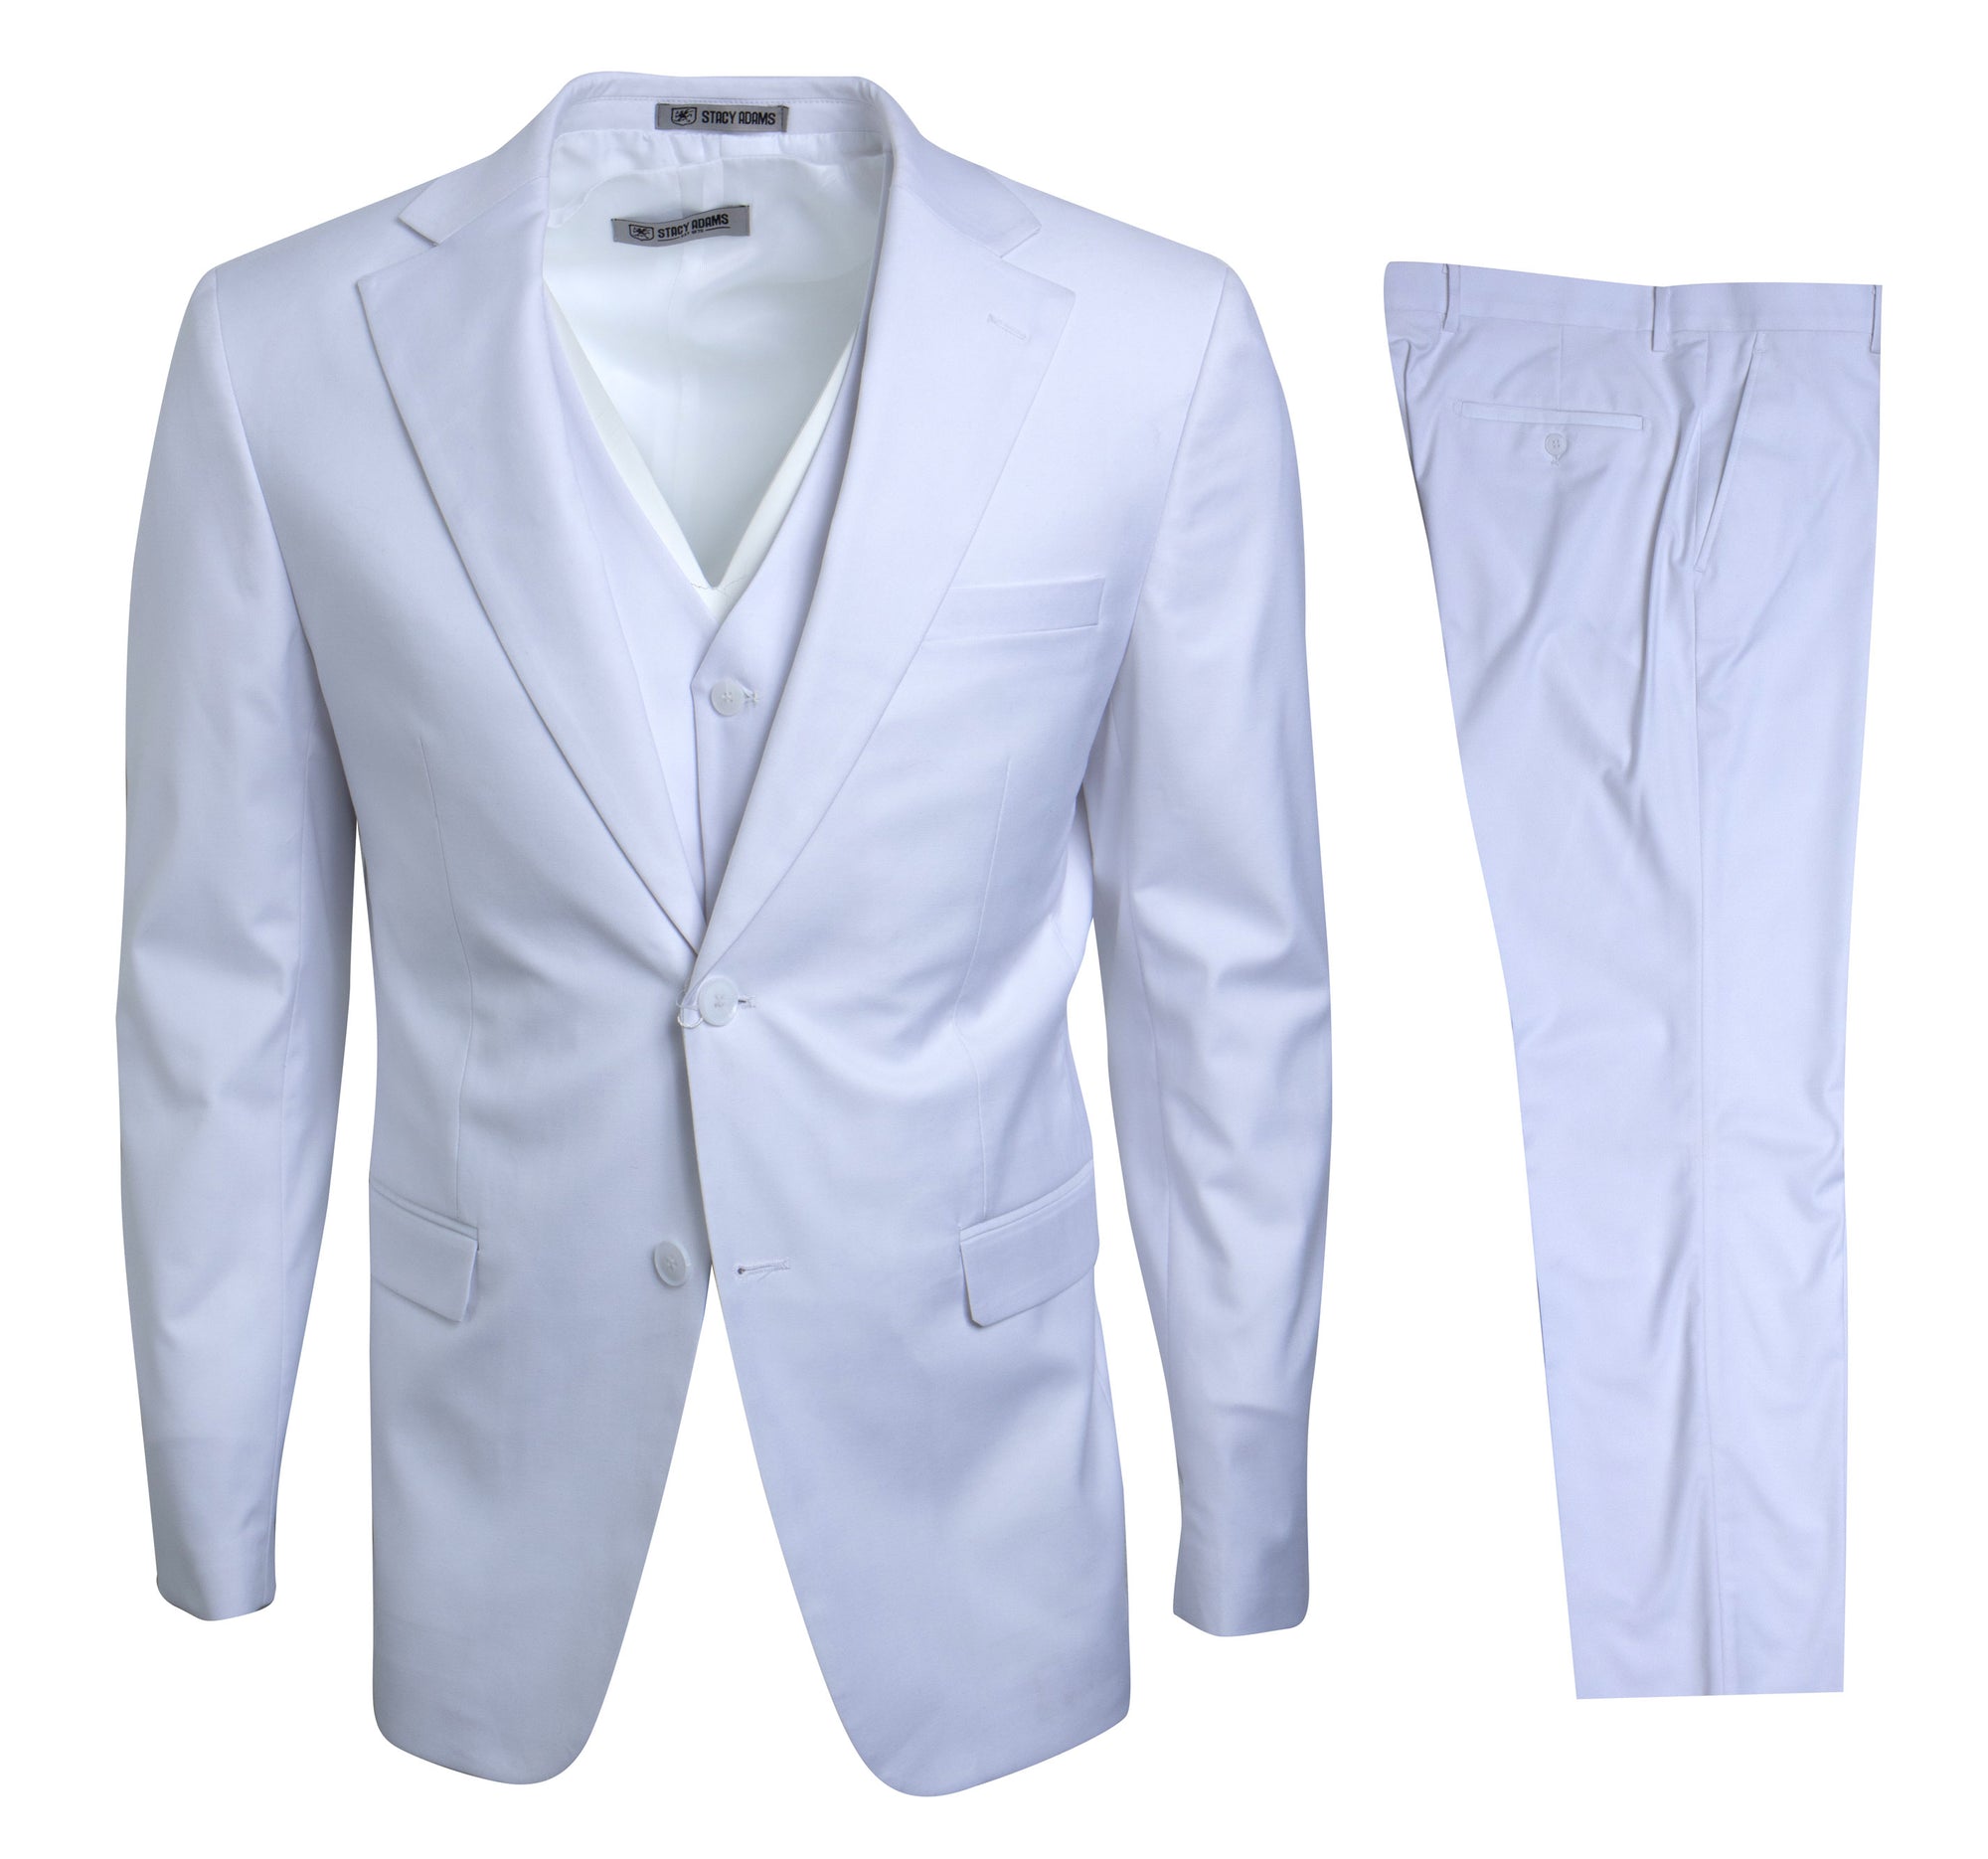 Men's White Stacy Adams Suit